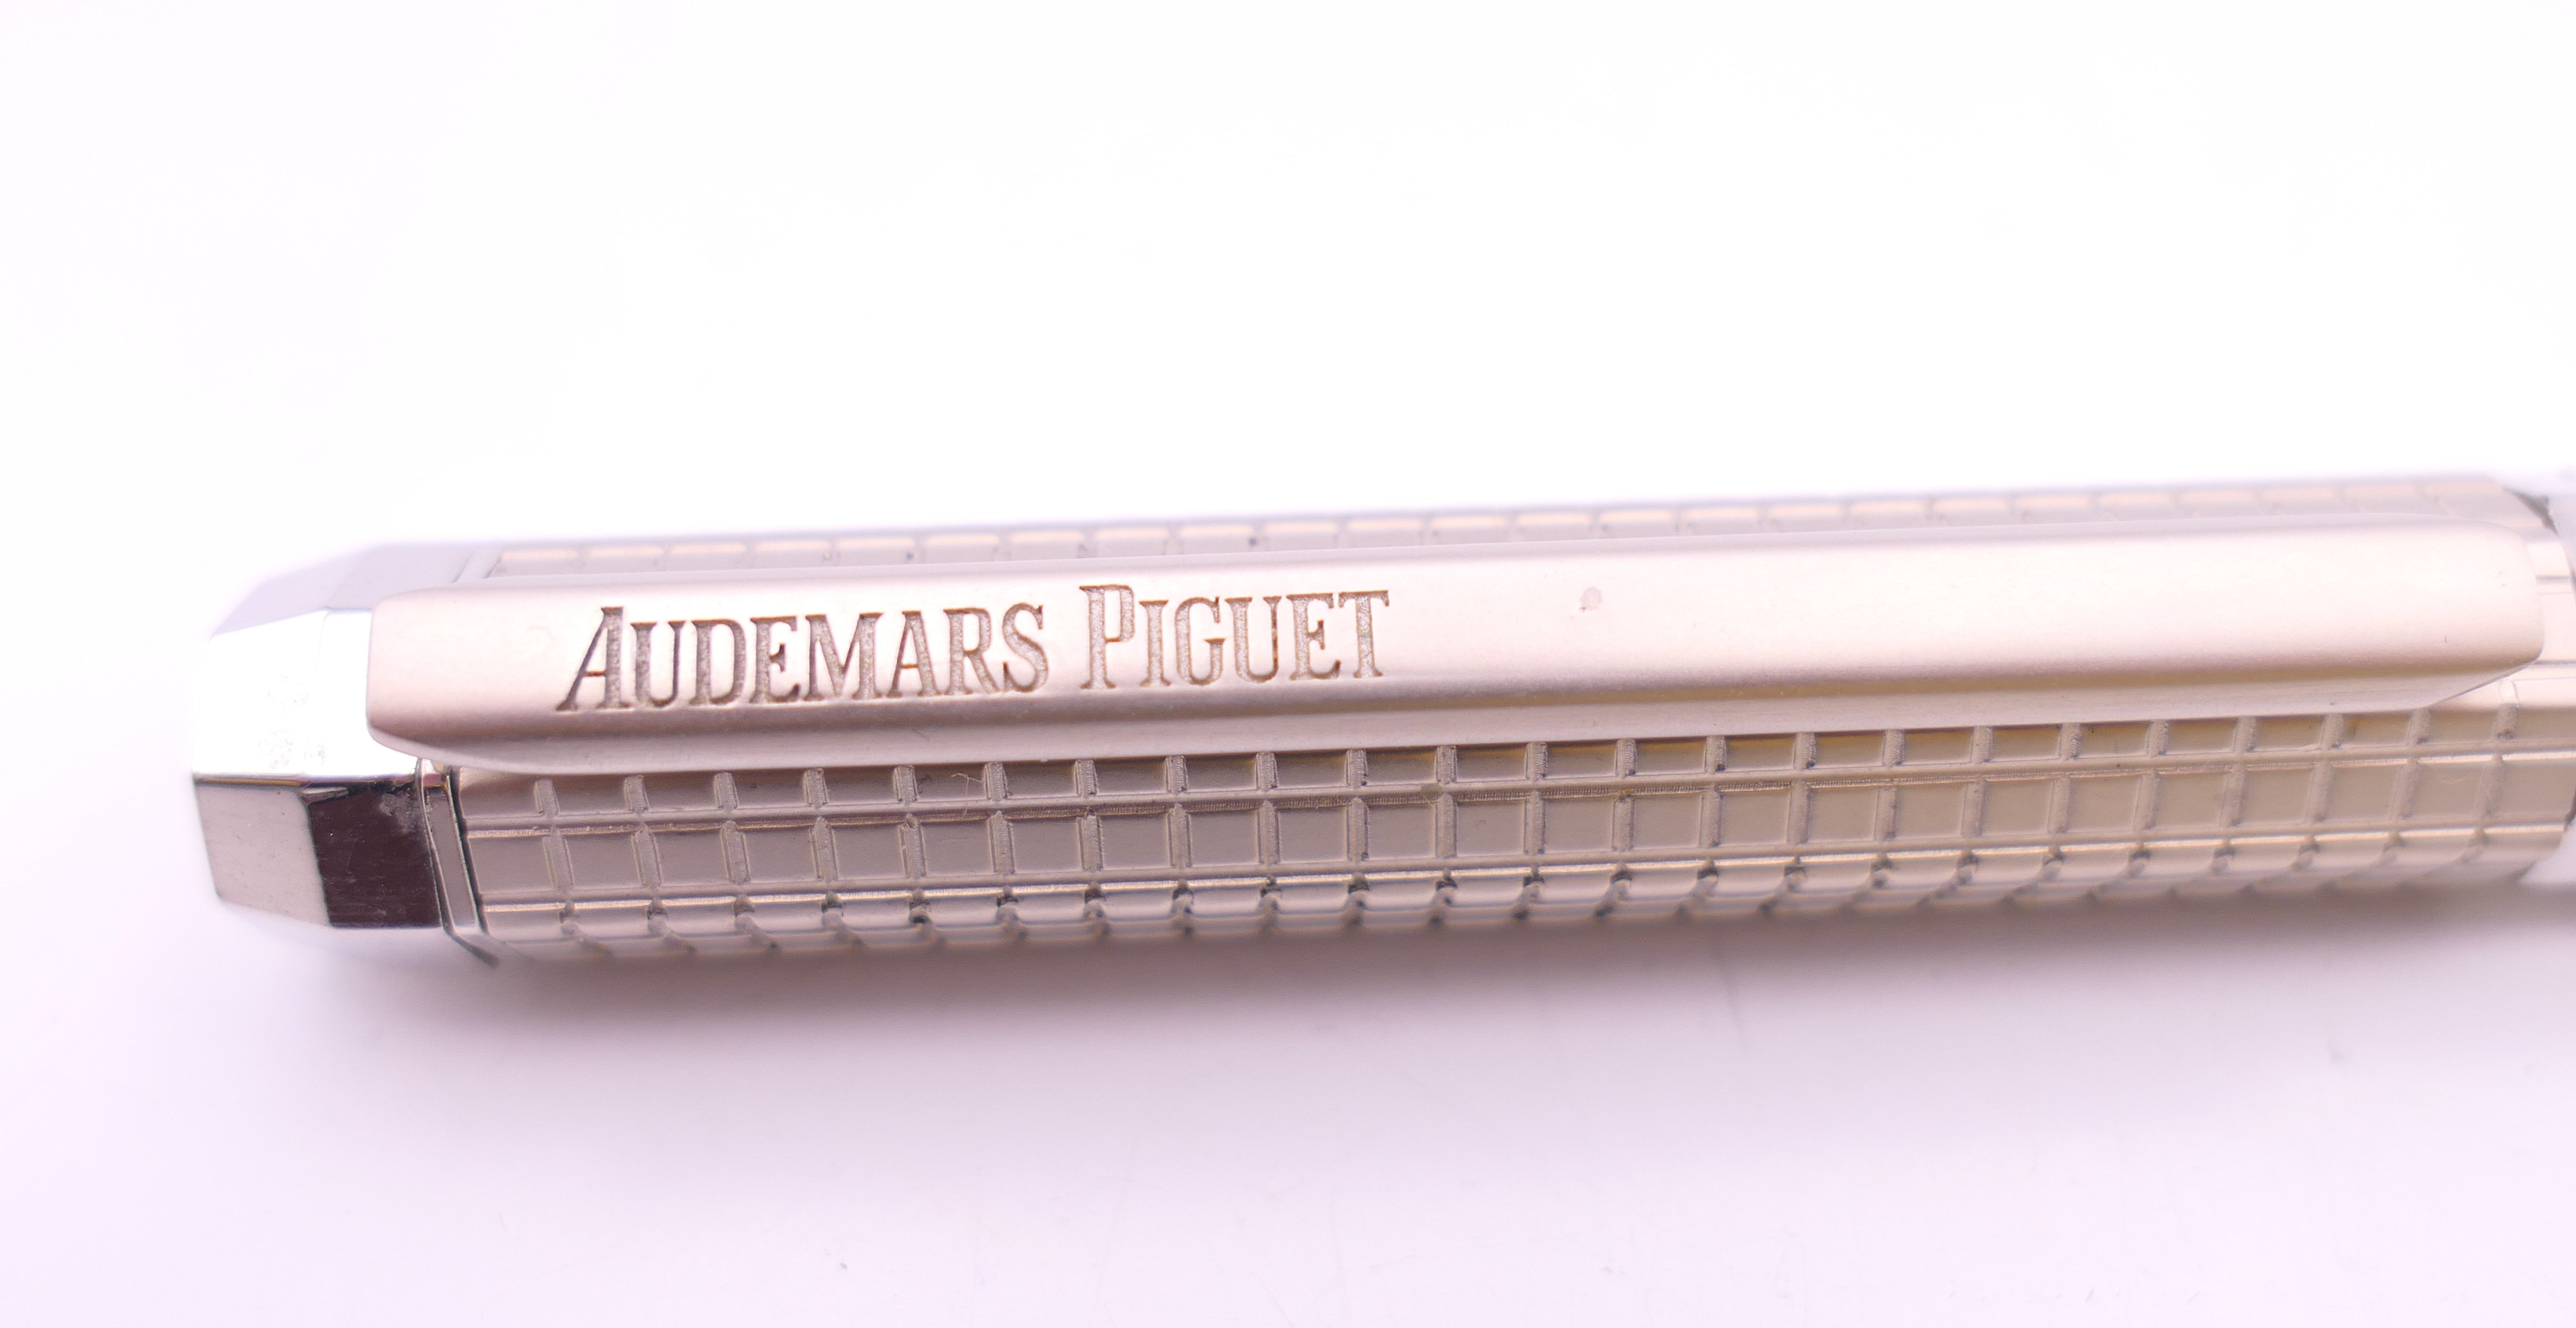 A Audemars Piquet biro pen in original box. - Image 2 of 6